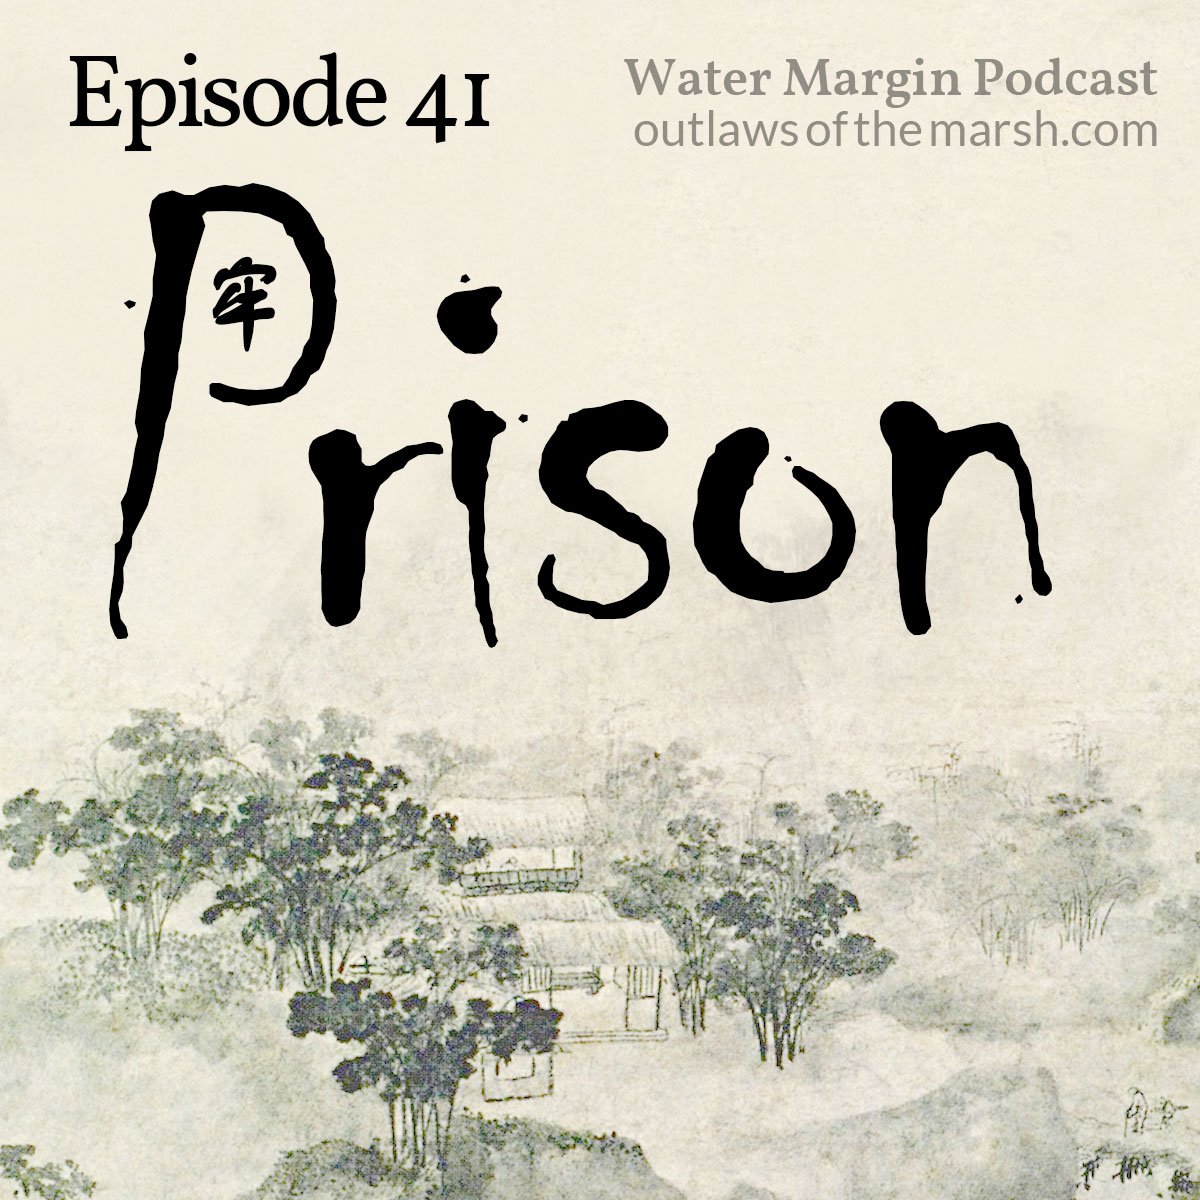 Water Margin Podcast: Episode 041